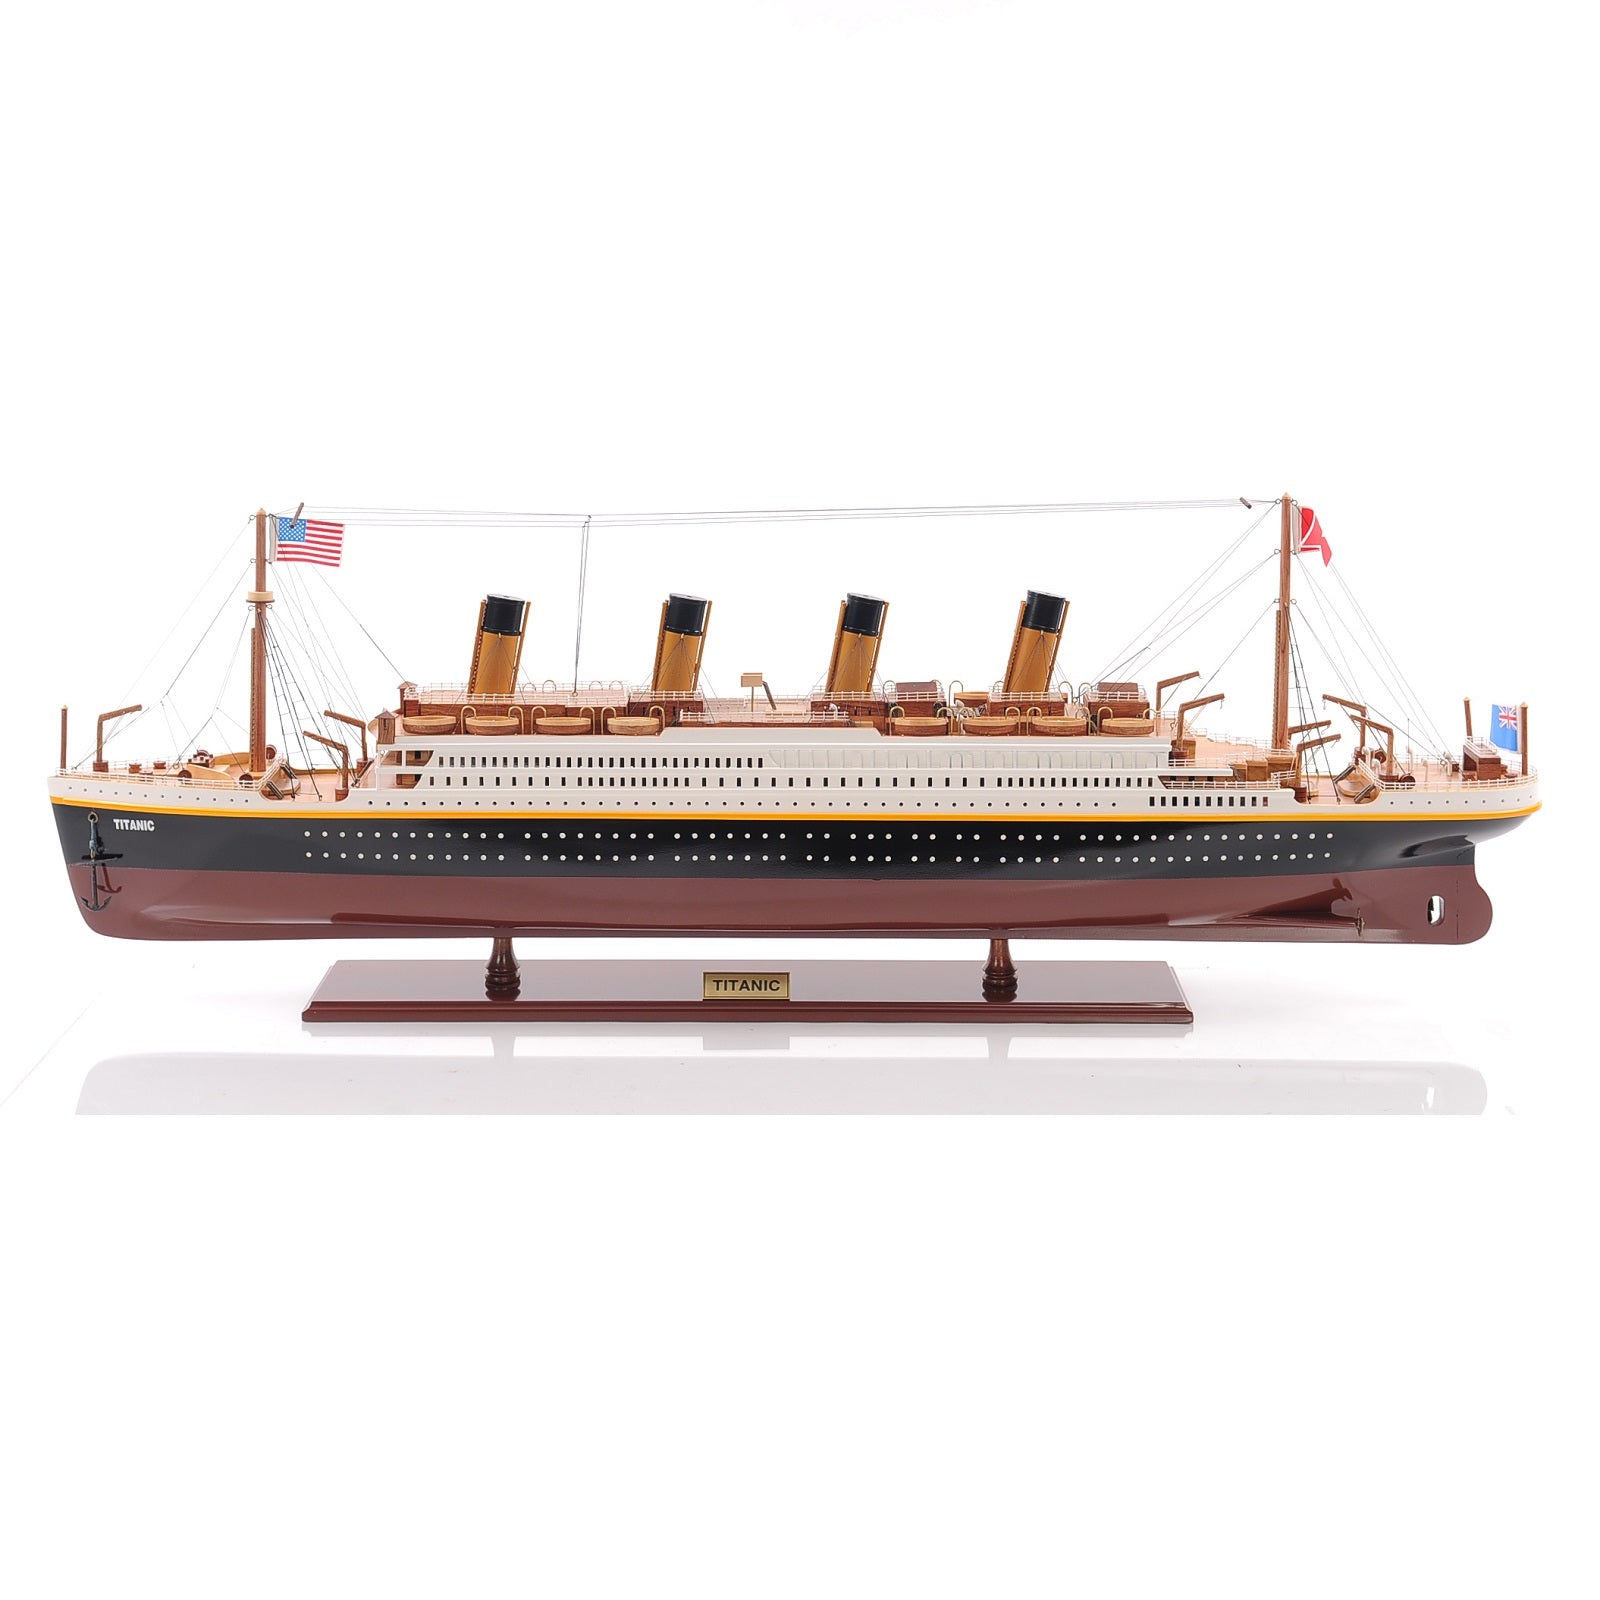 Titanic Painted Medium, Fully Assembled